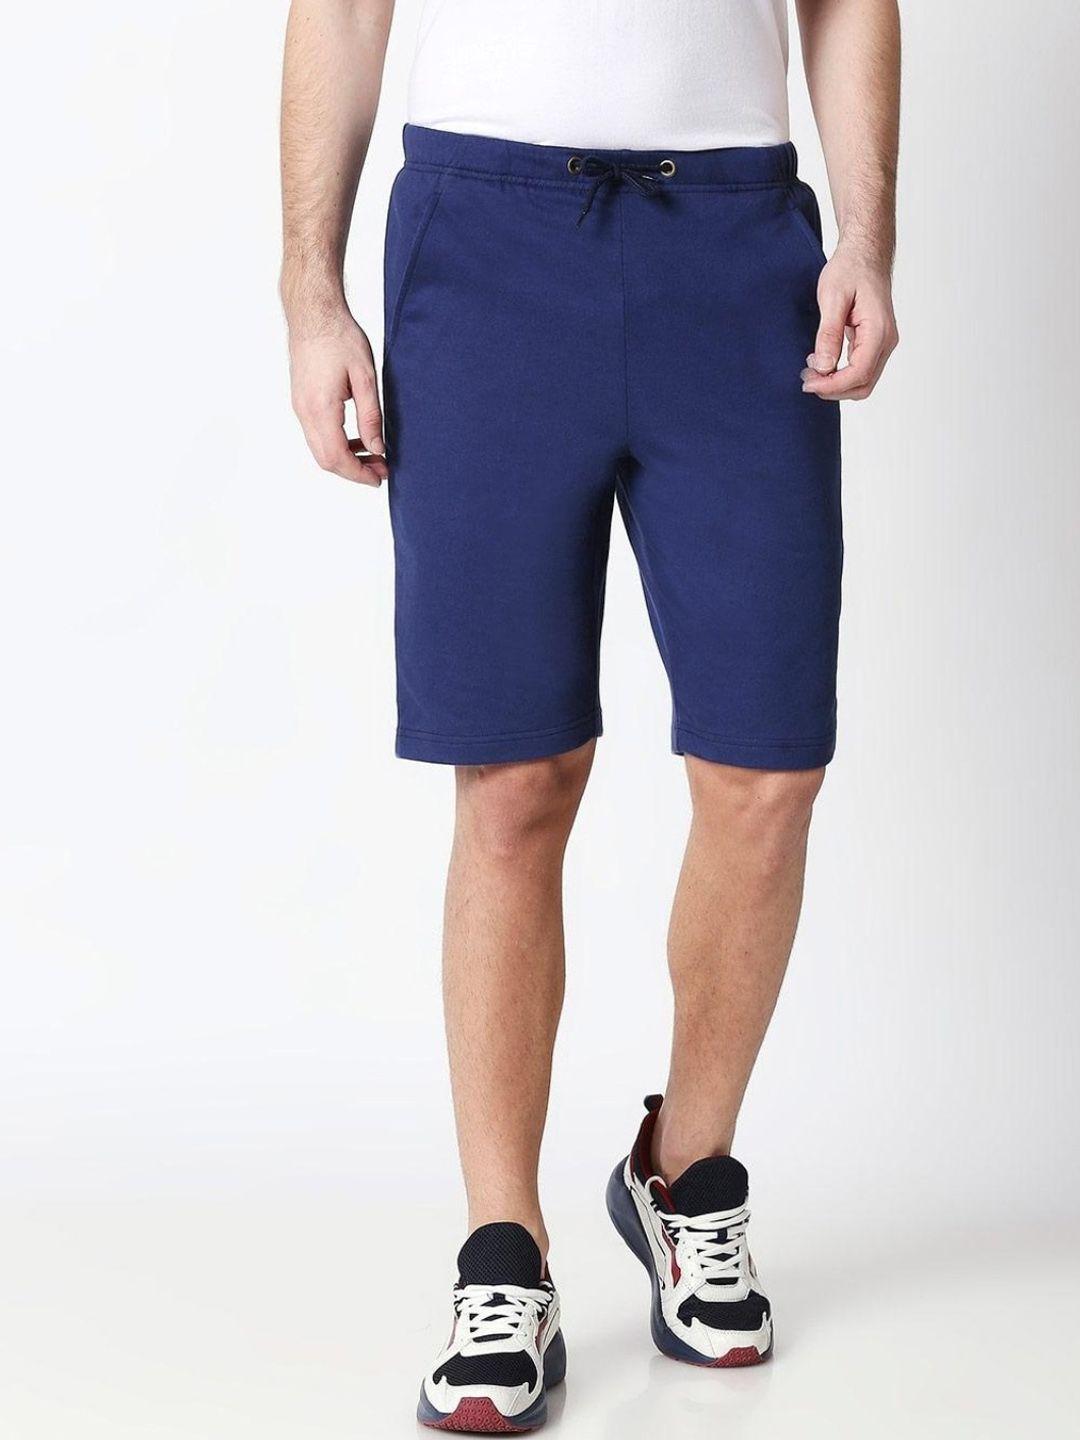 bewakoof men blue mid-rise knee length cotton shorts